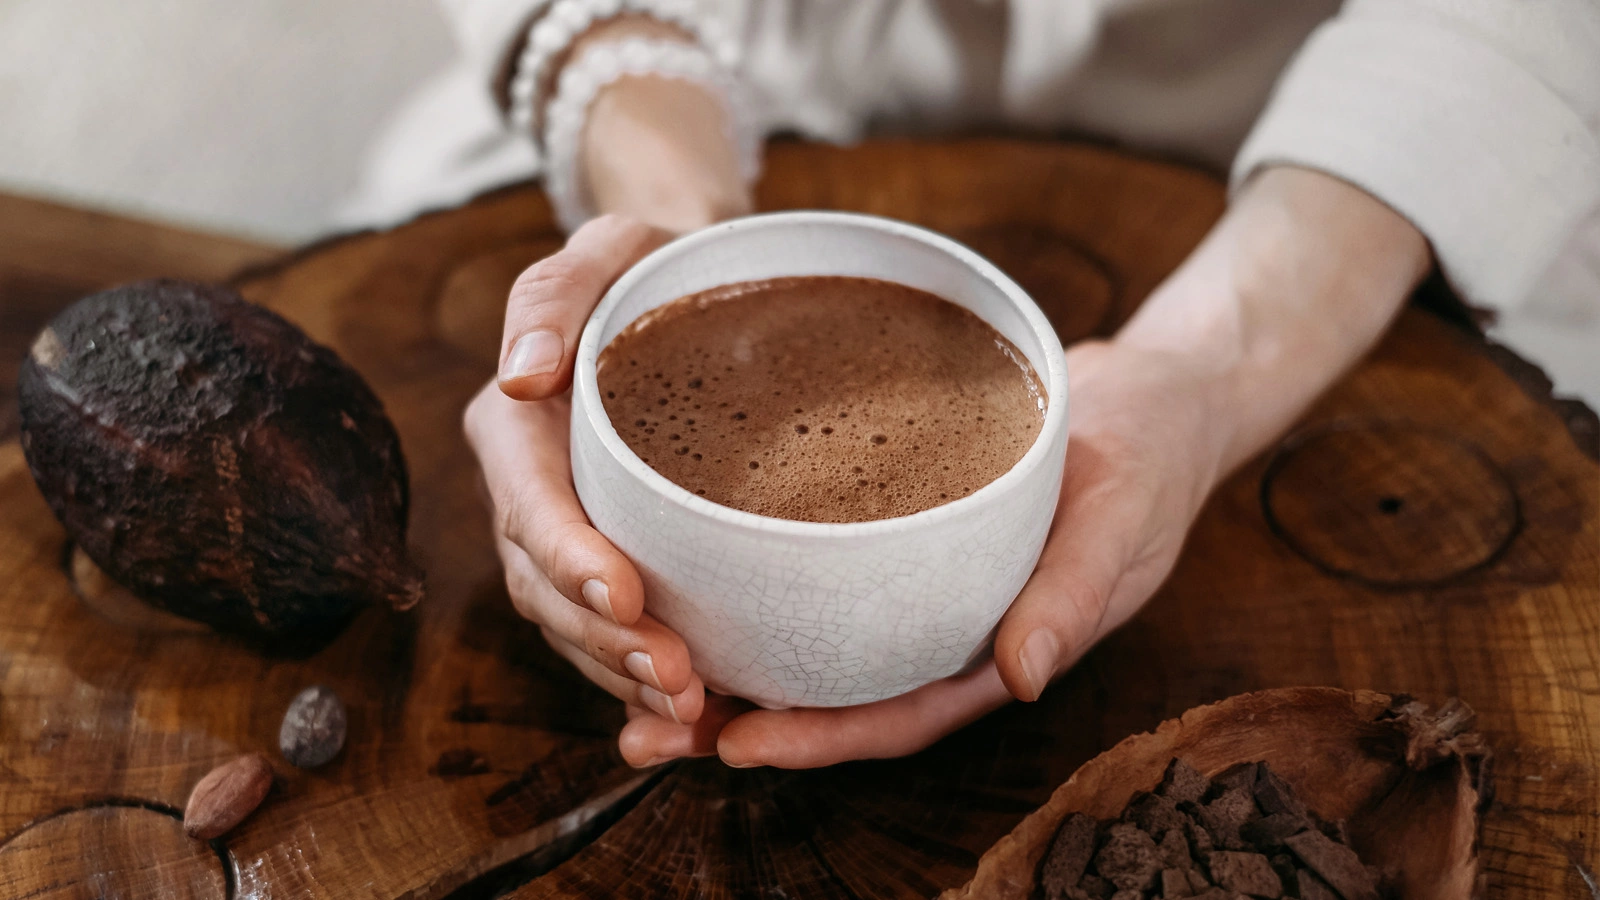 Как сварить какао на молоке из какао порошка?